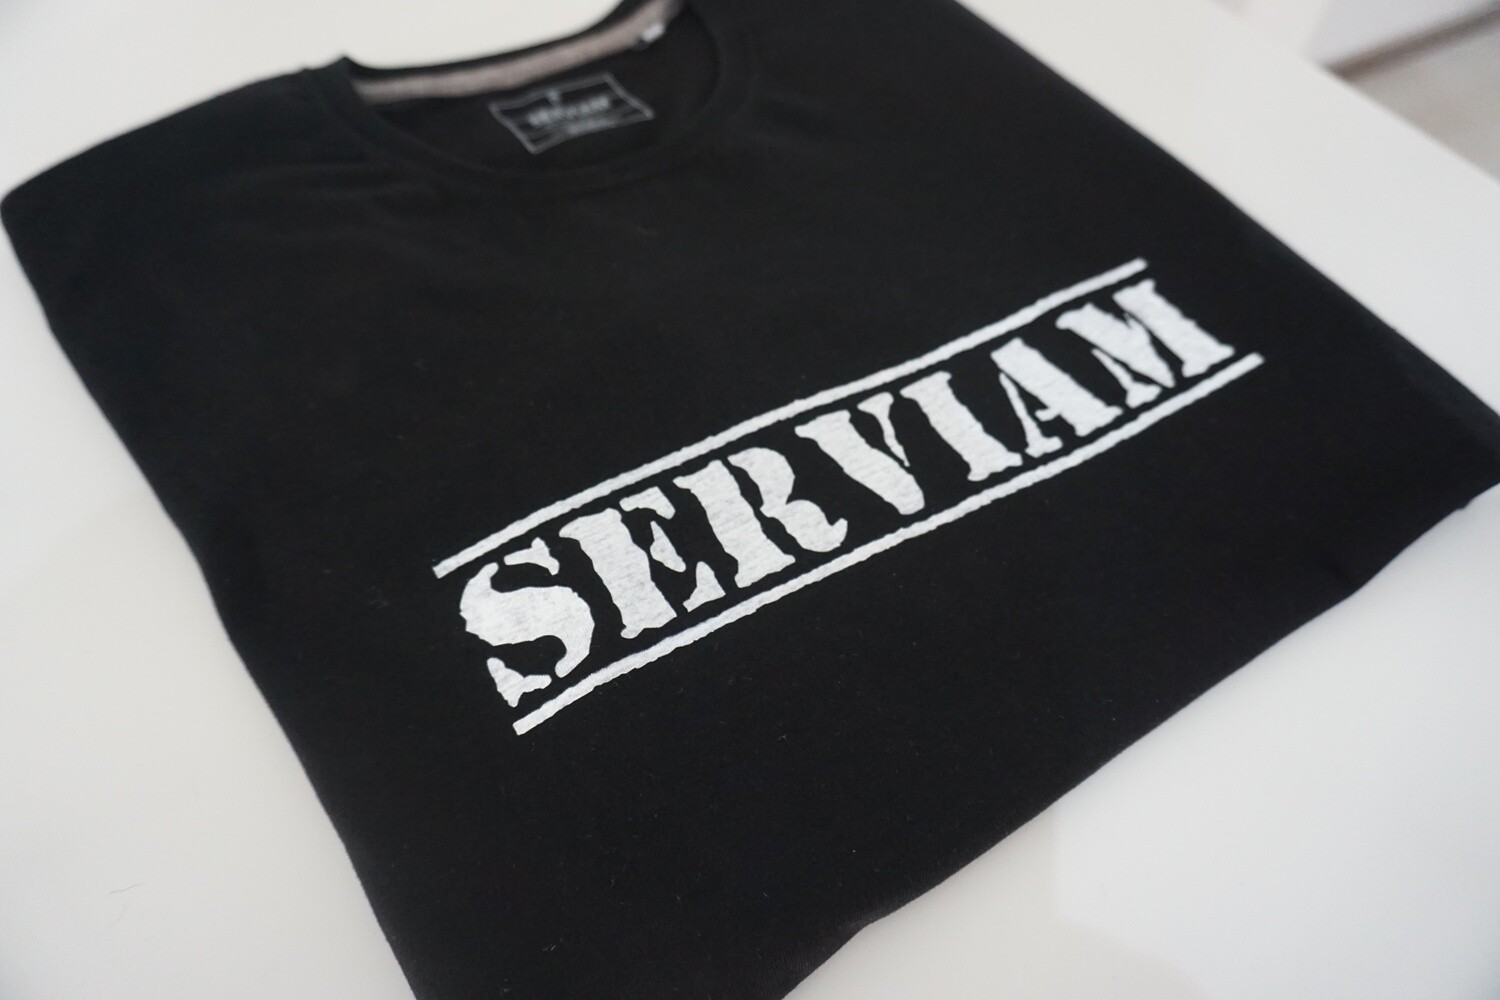 Serviam Classic T-shirt (Large)